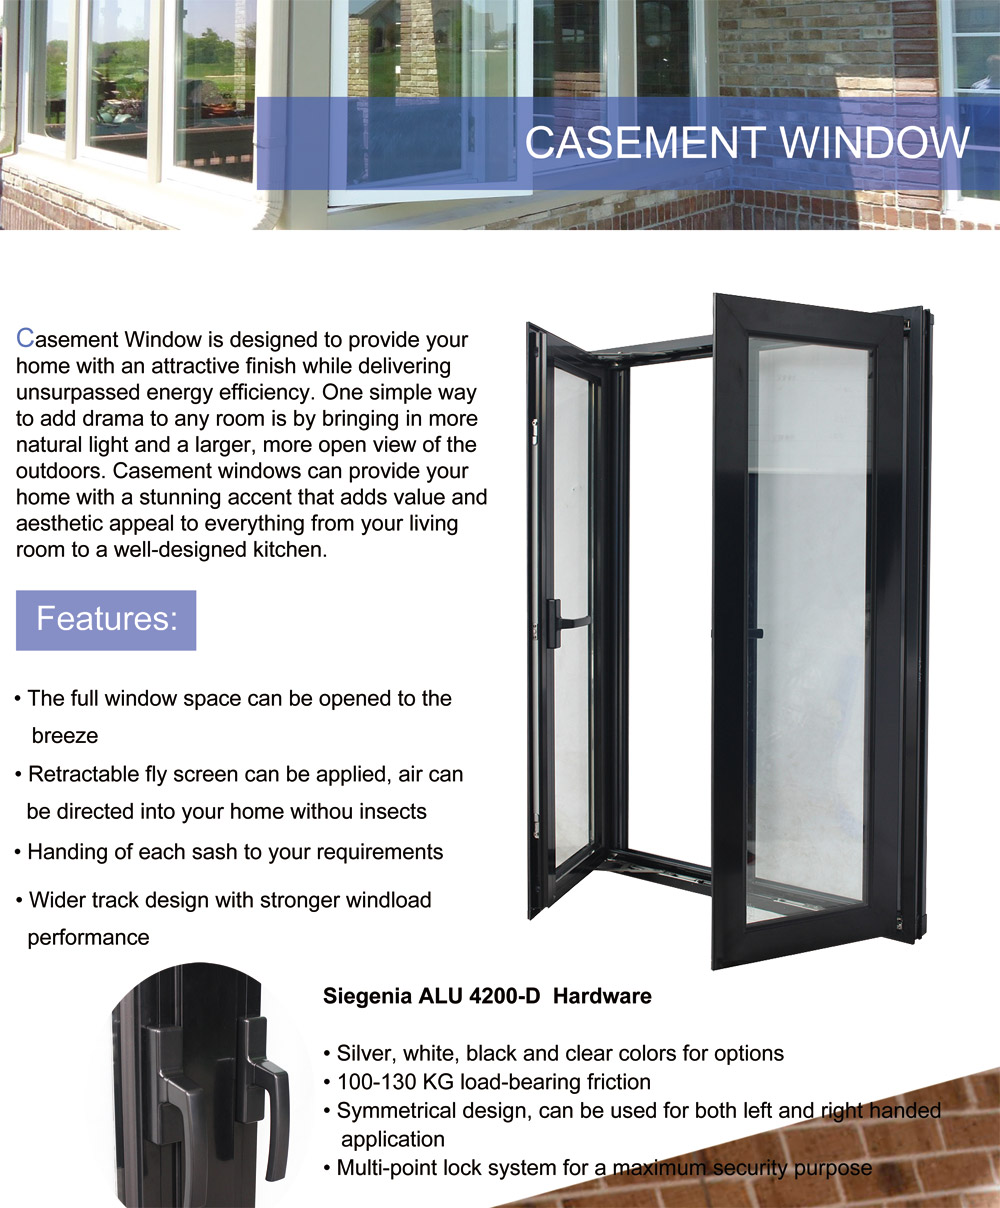 CASEMENT WINDOW